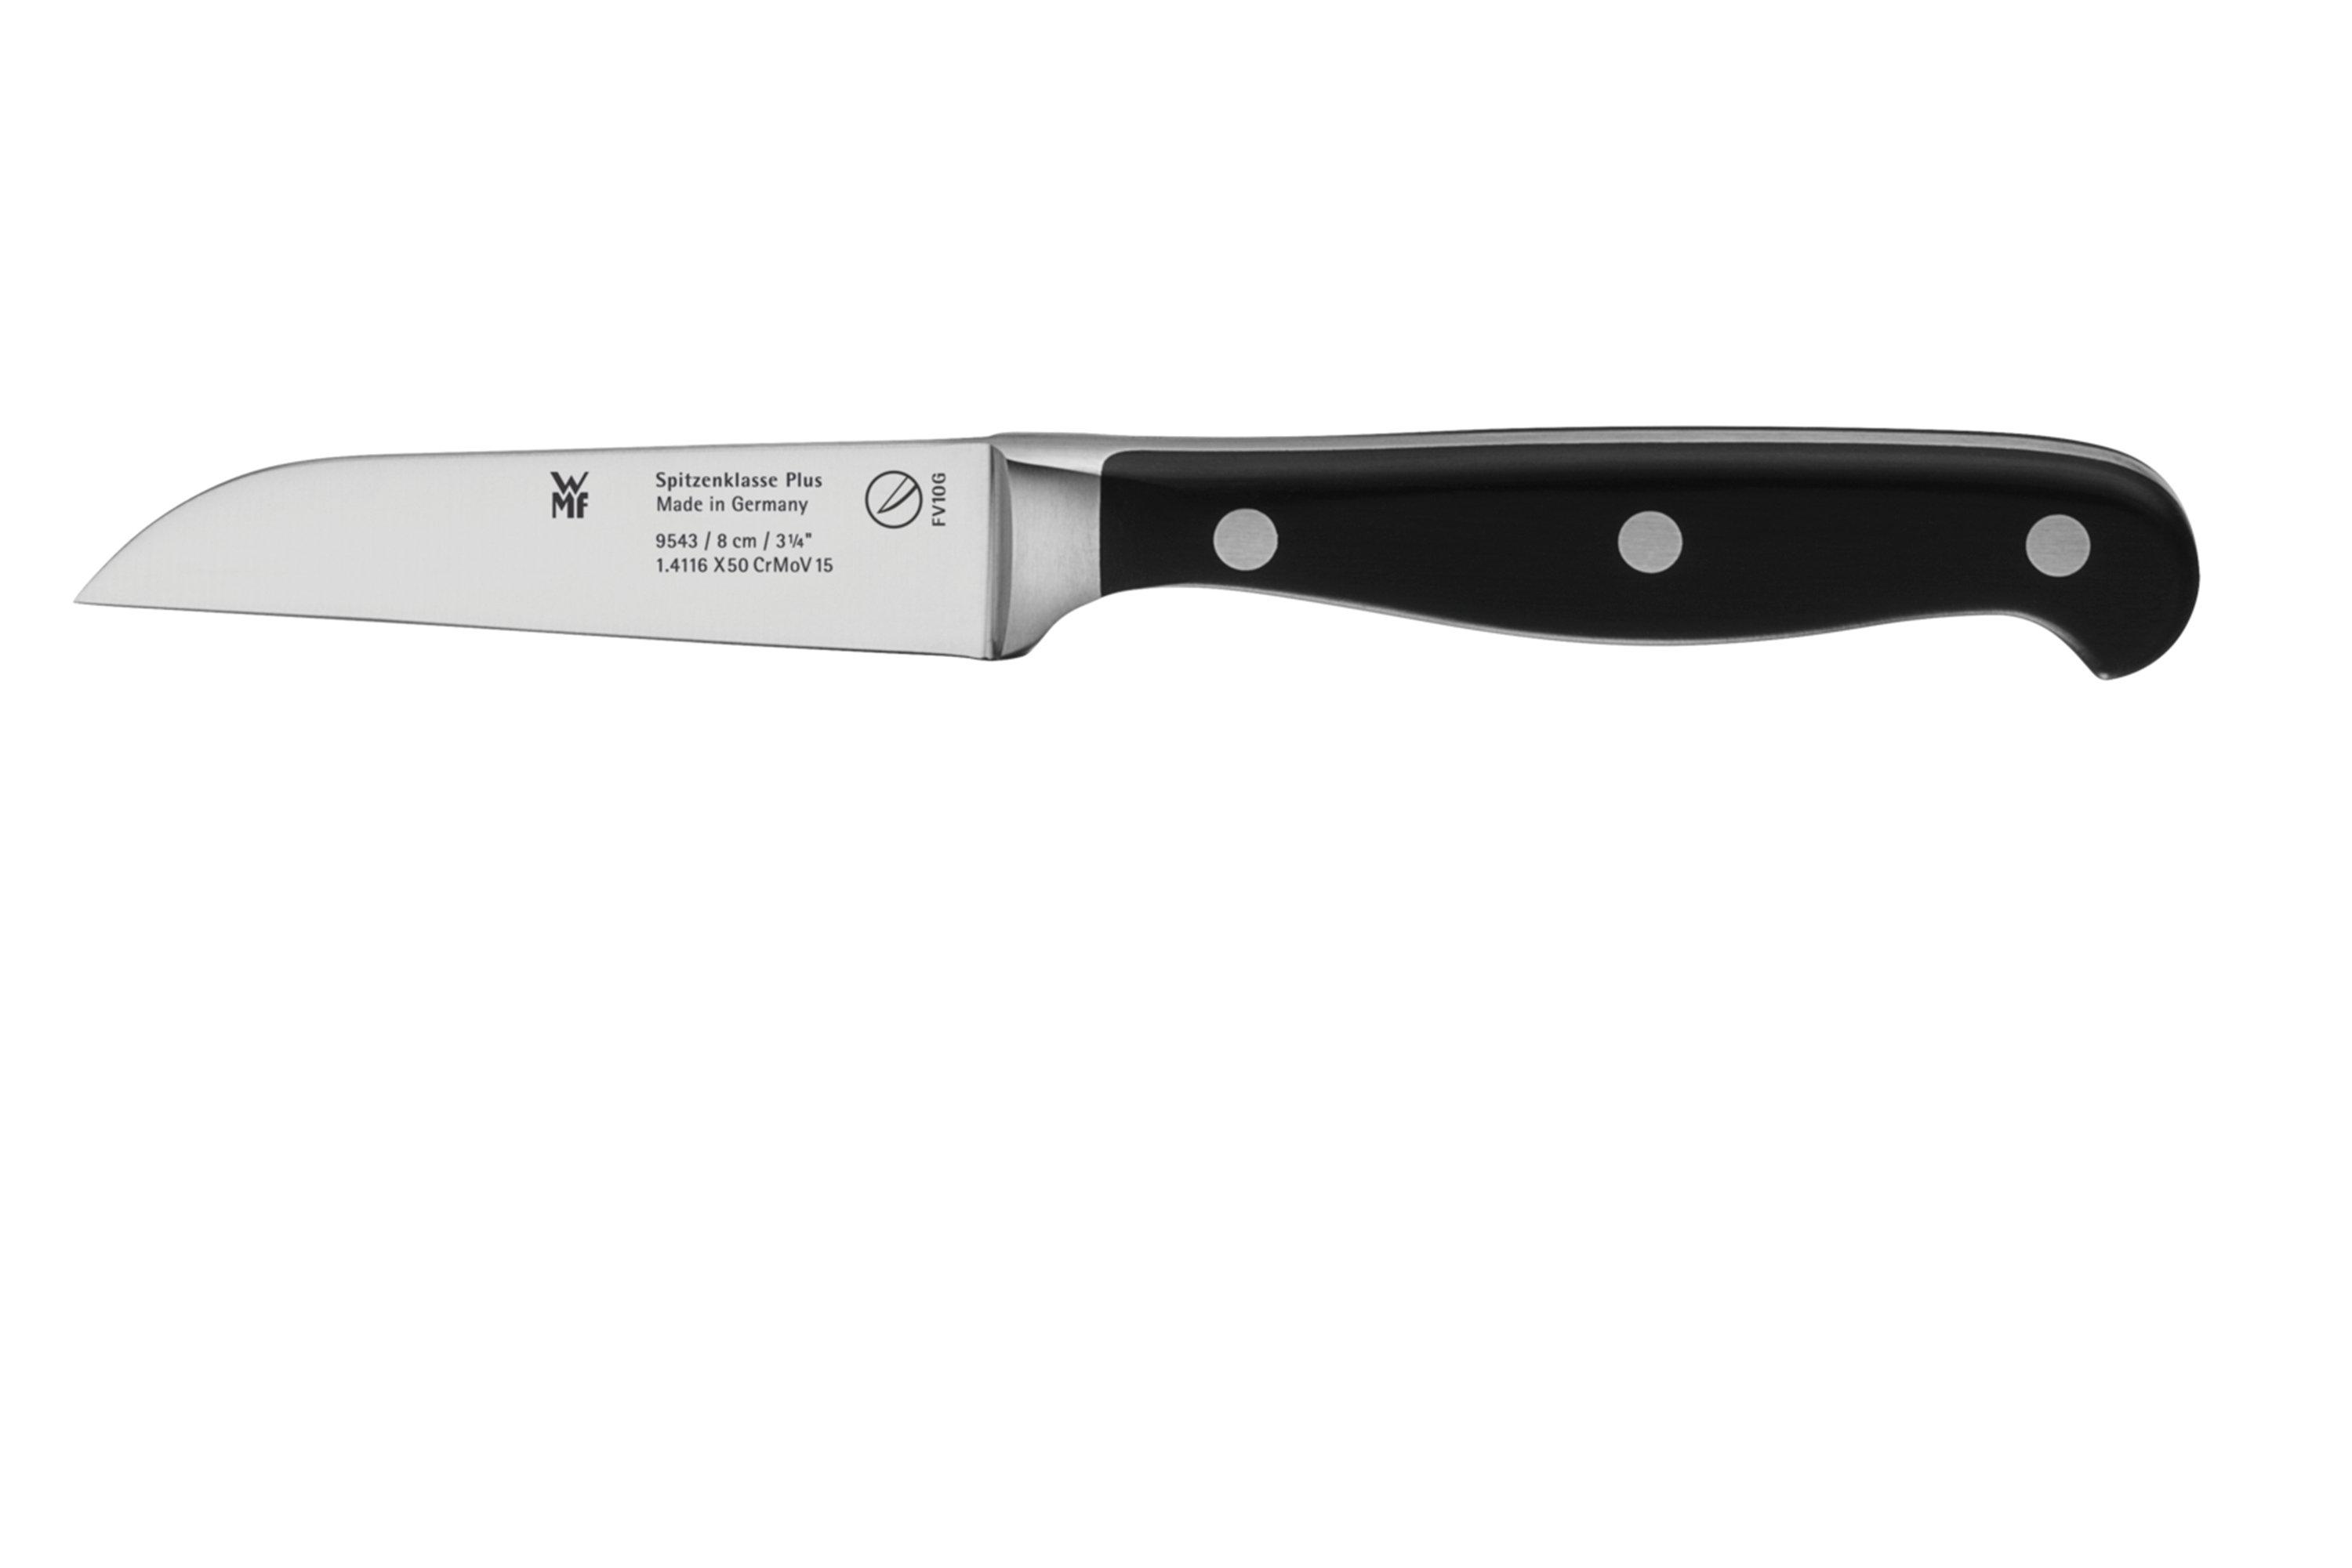 WMF Spitzenklasse Plus 1894919992, 3-piece knife set | Advantageously  shopping at | Messersets